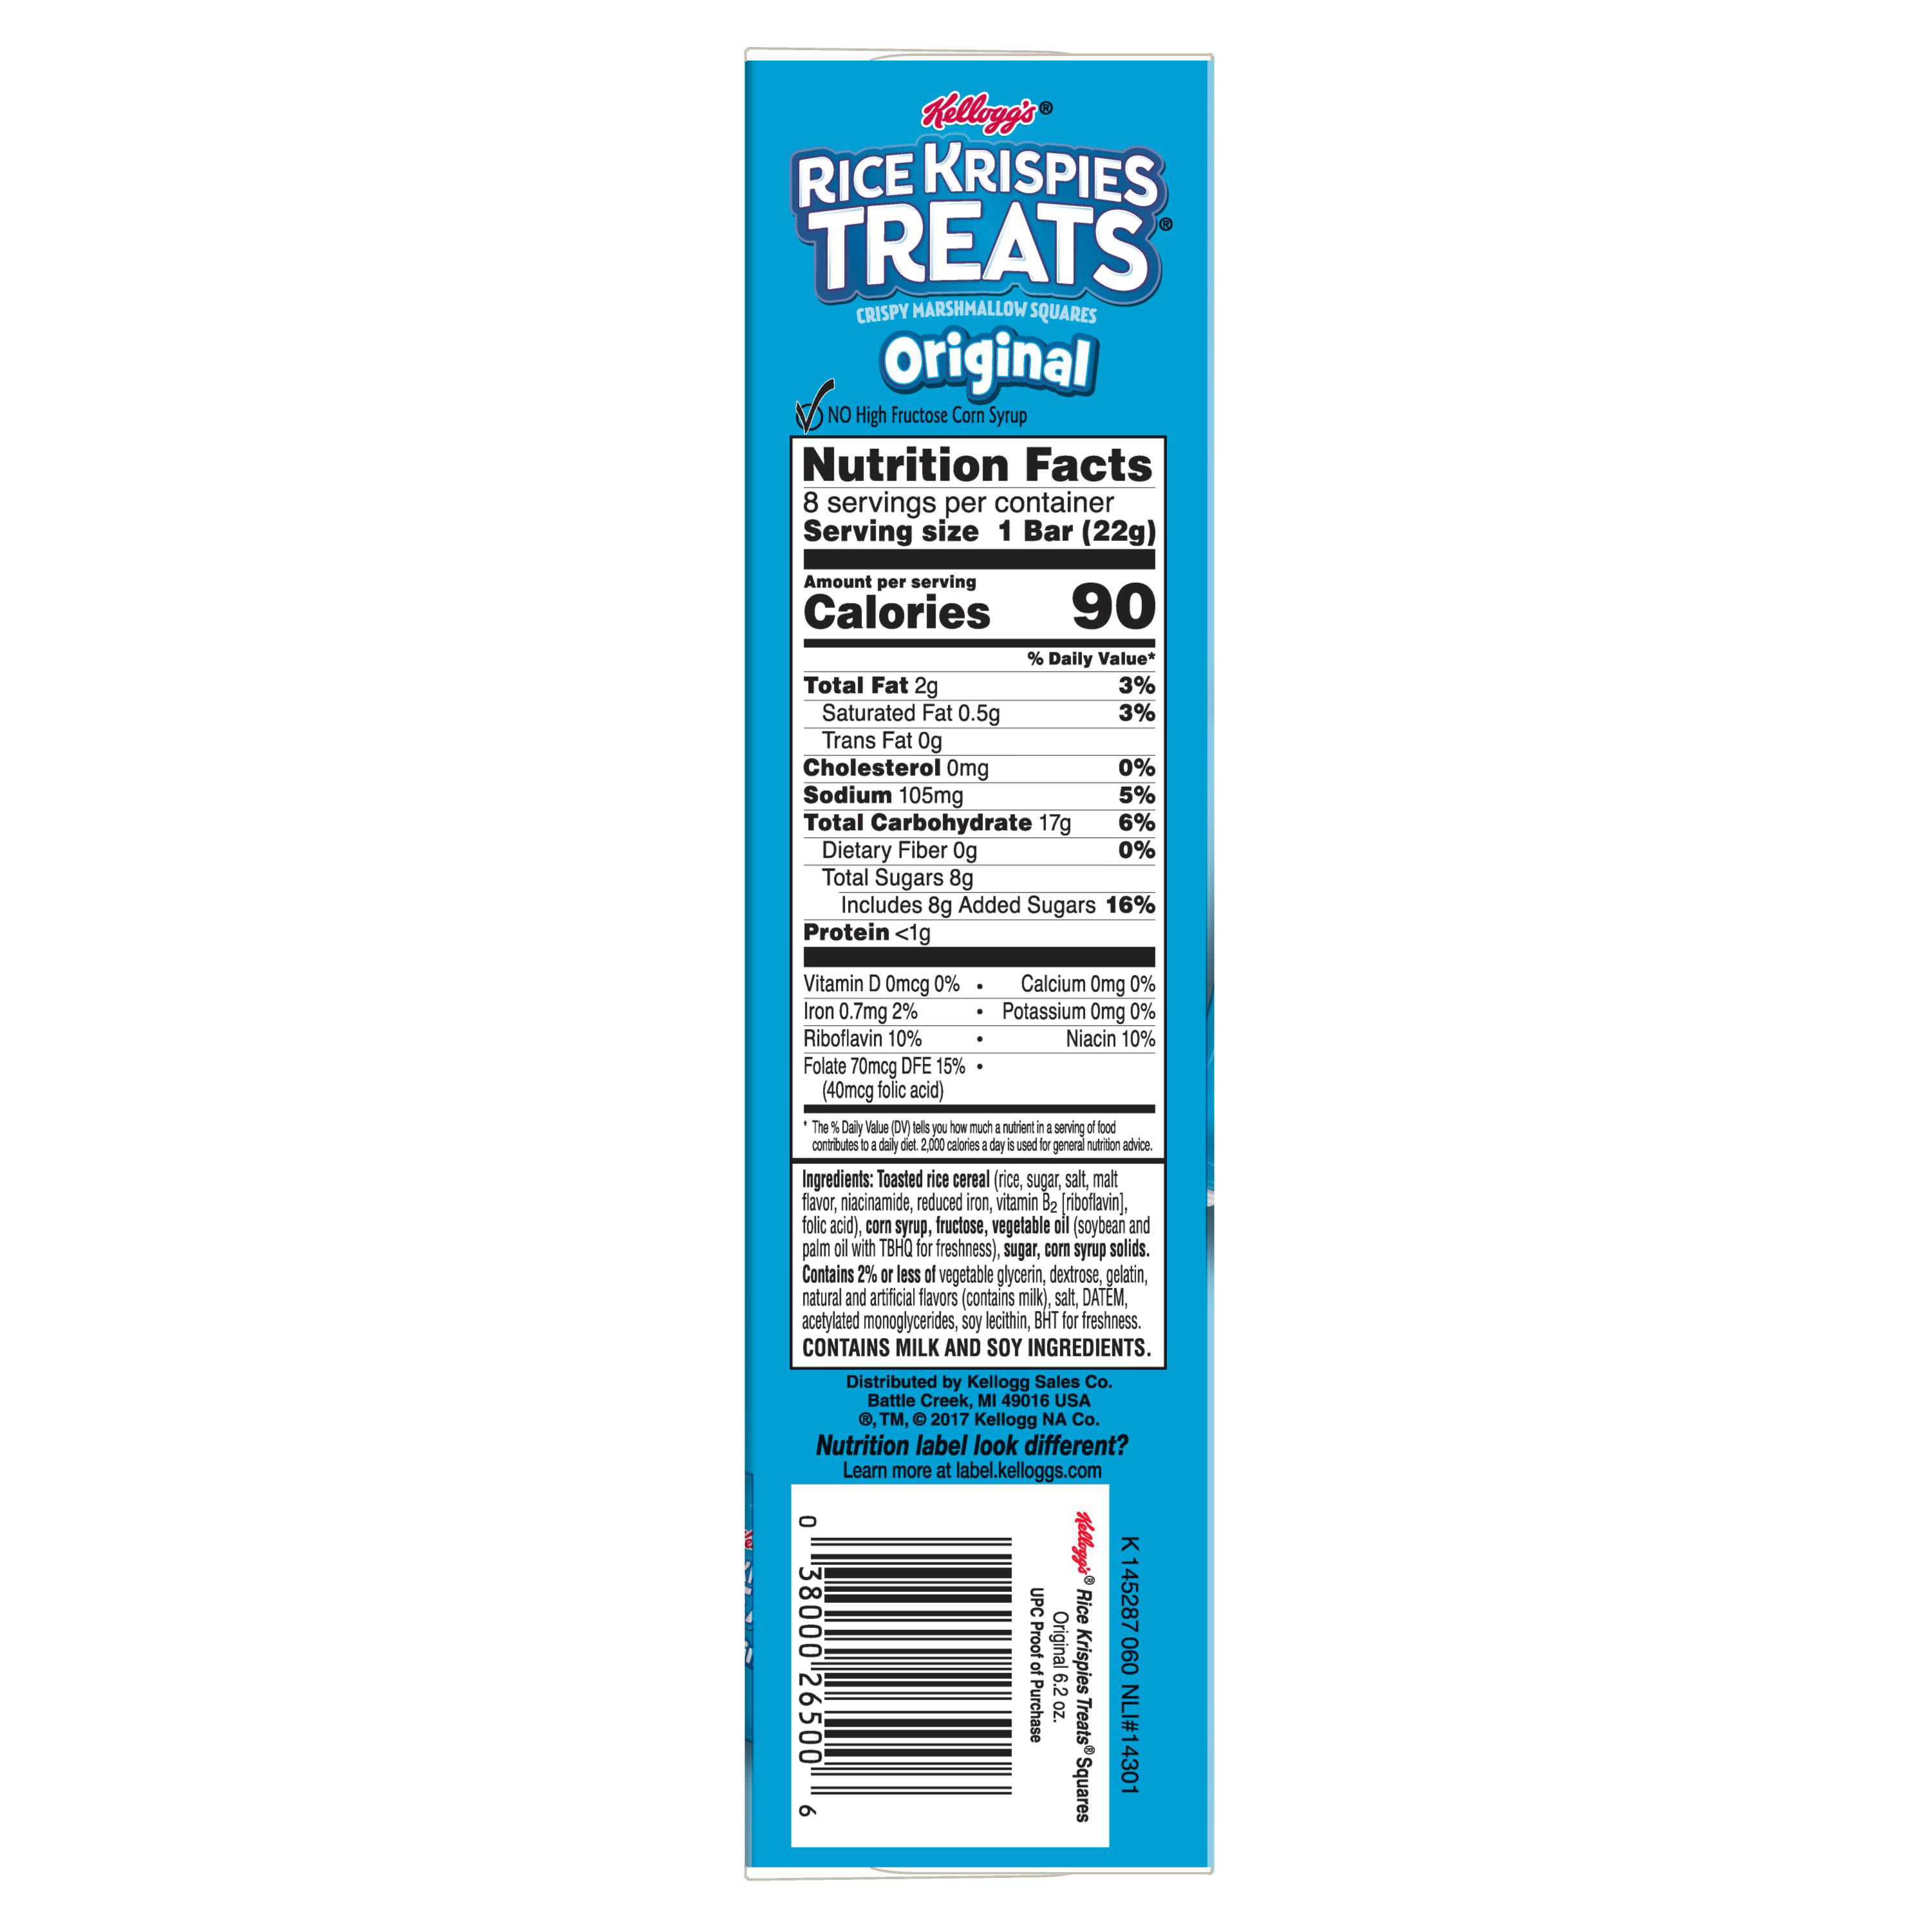 rice-krispies-nutrition-facts-label-label-ideas